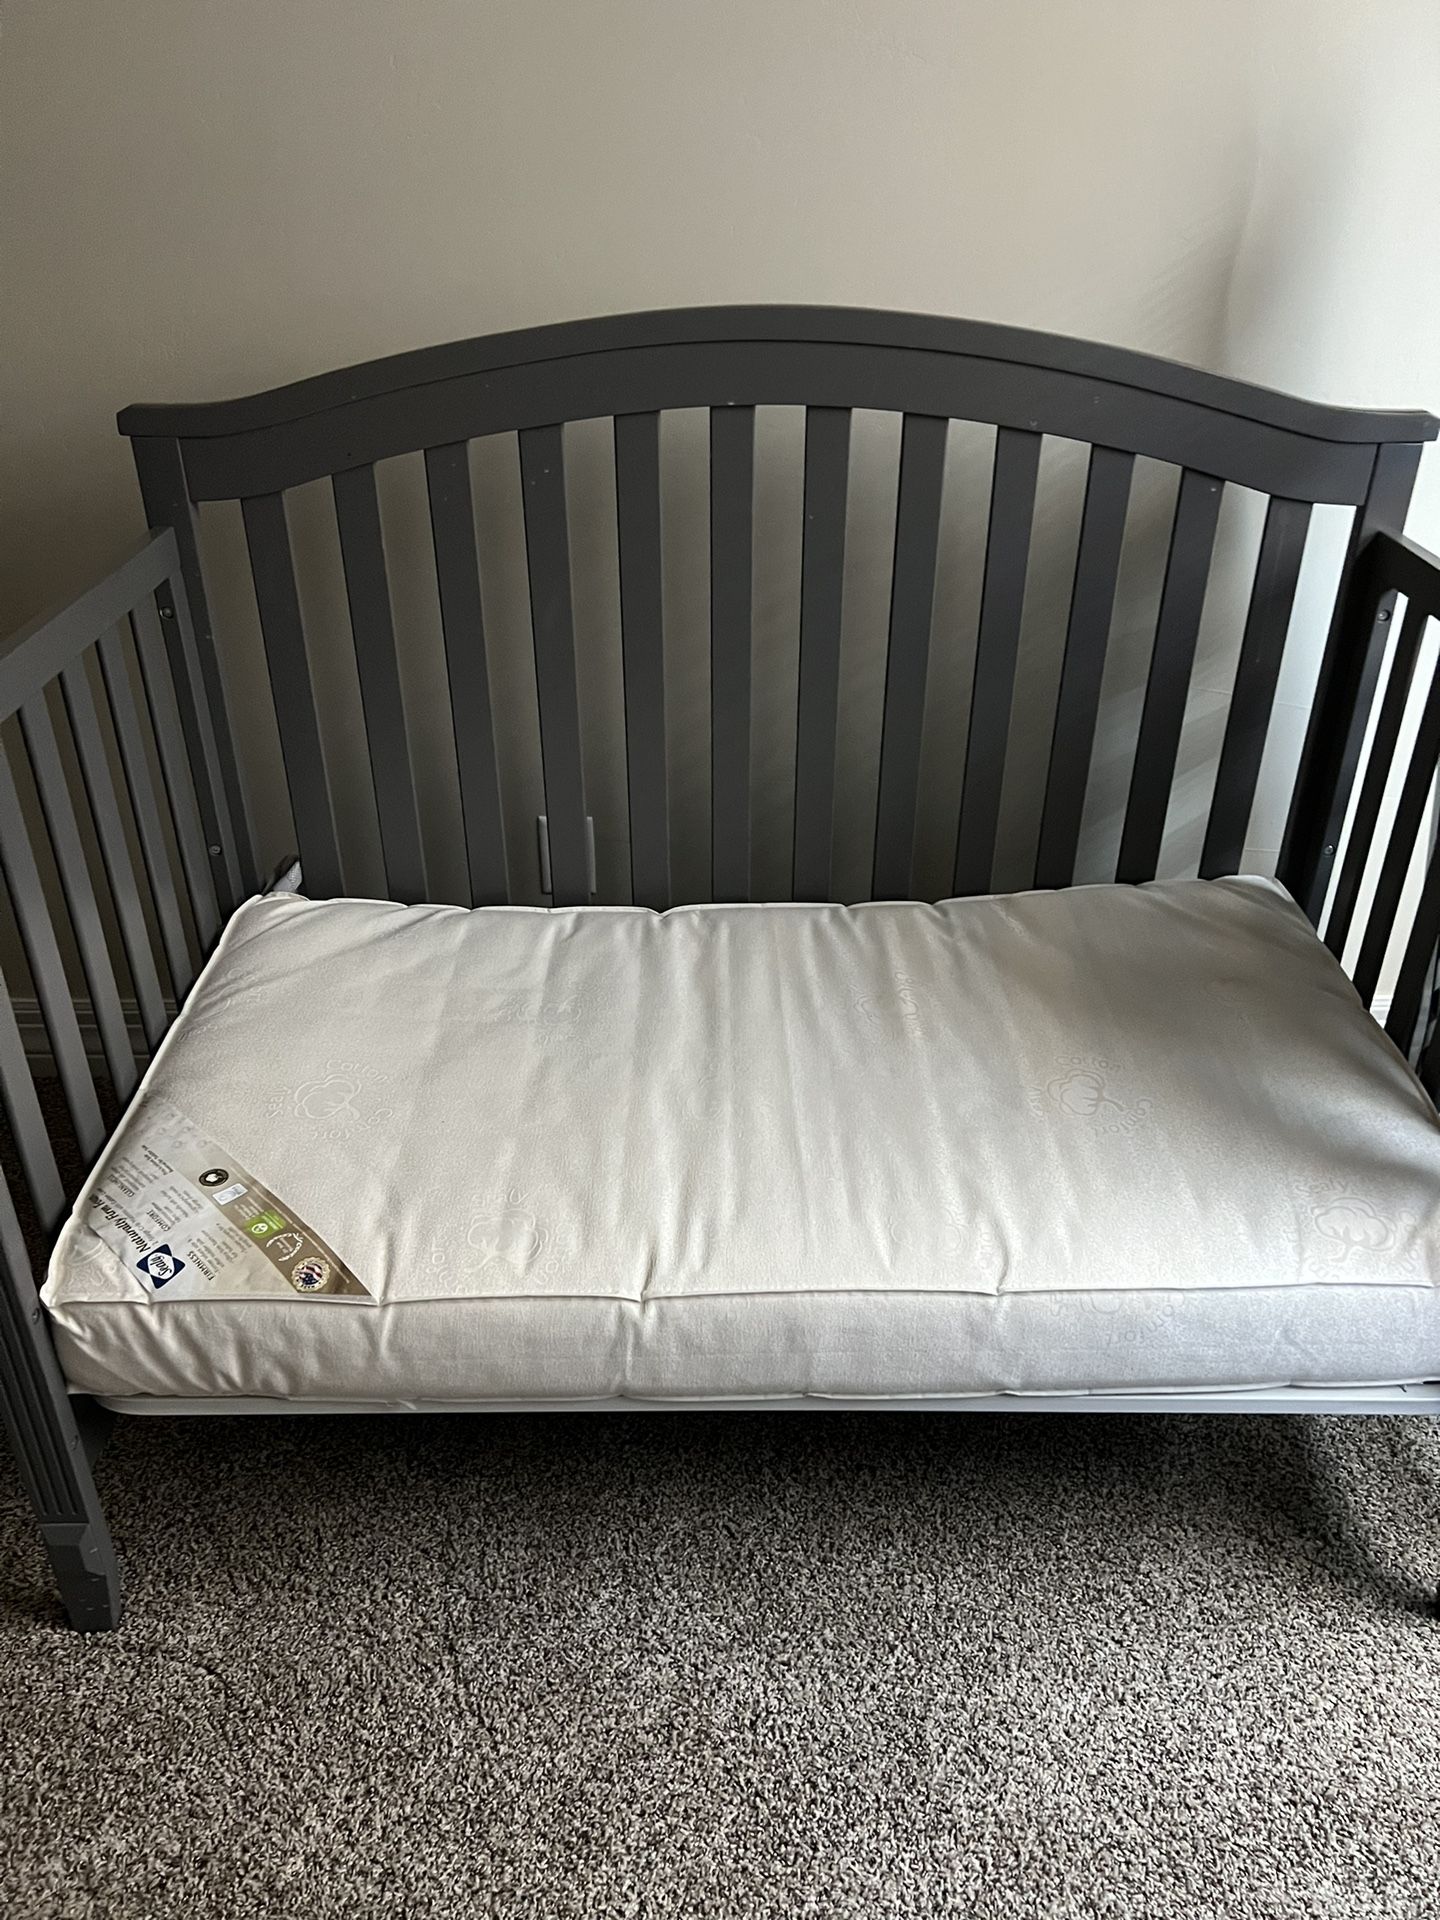 Crib With New Mattress 